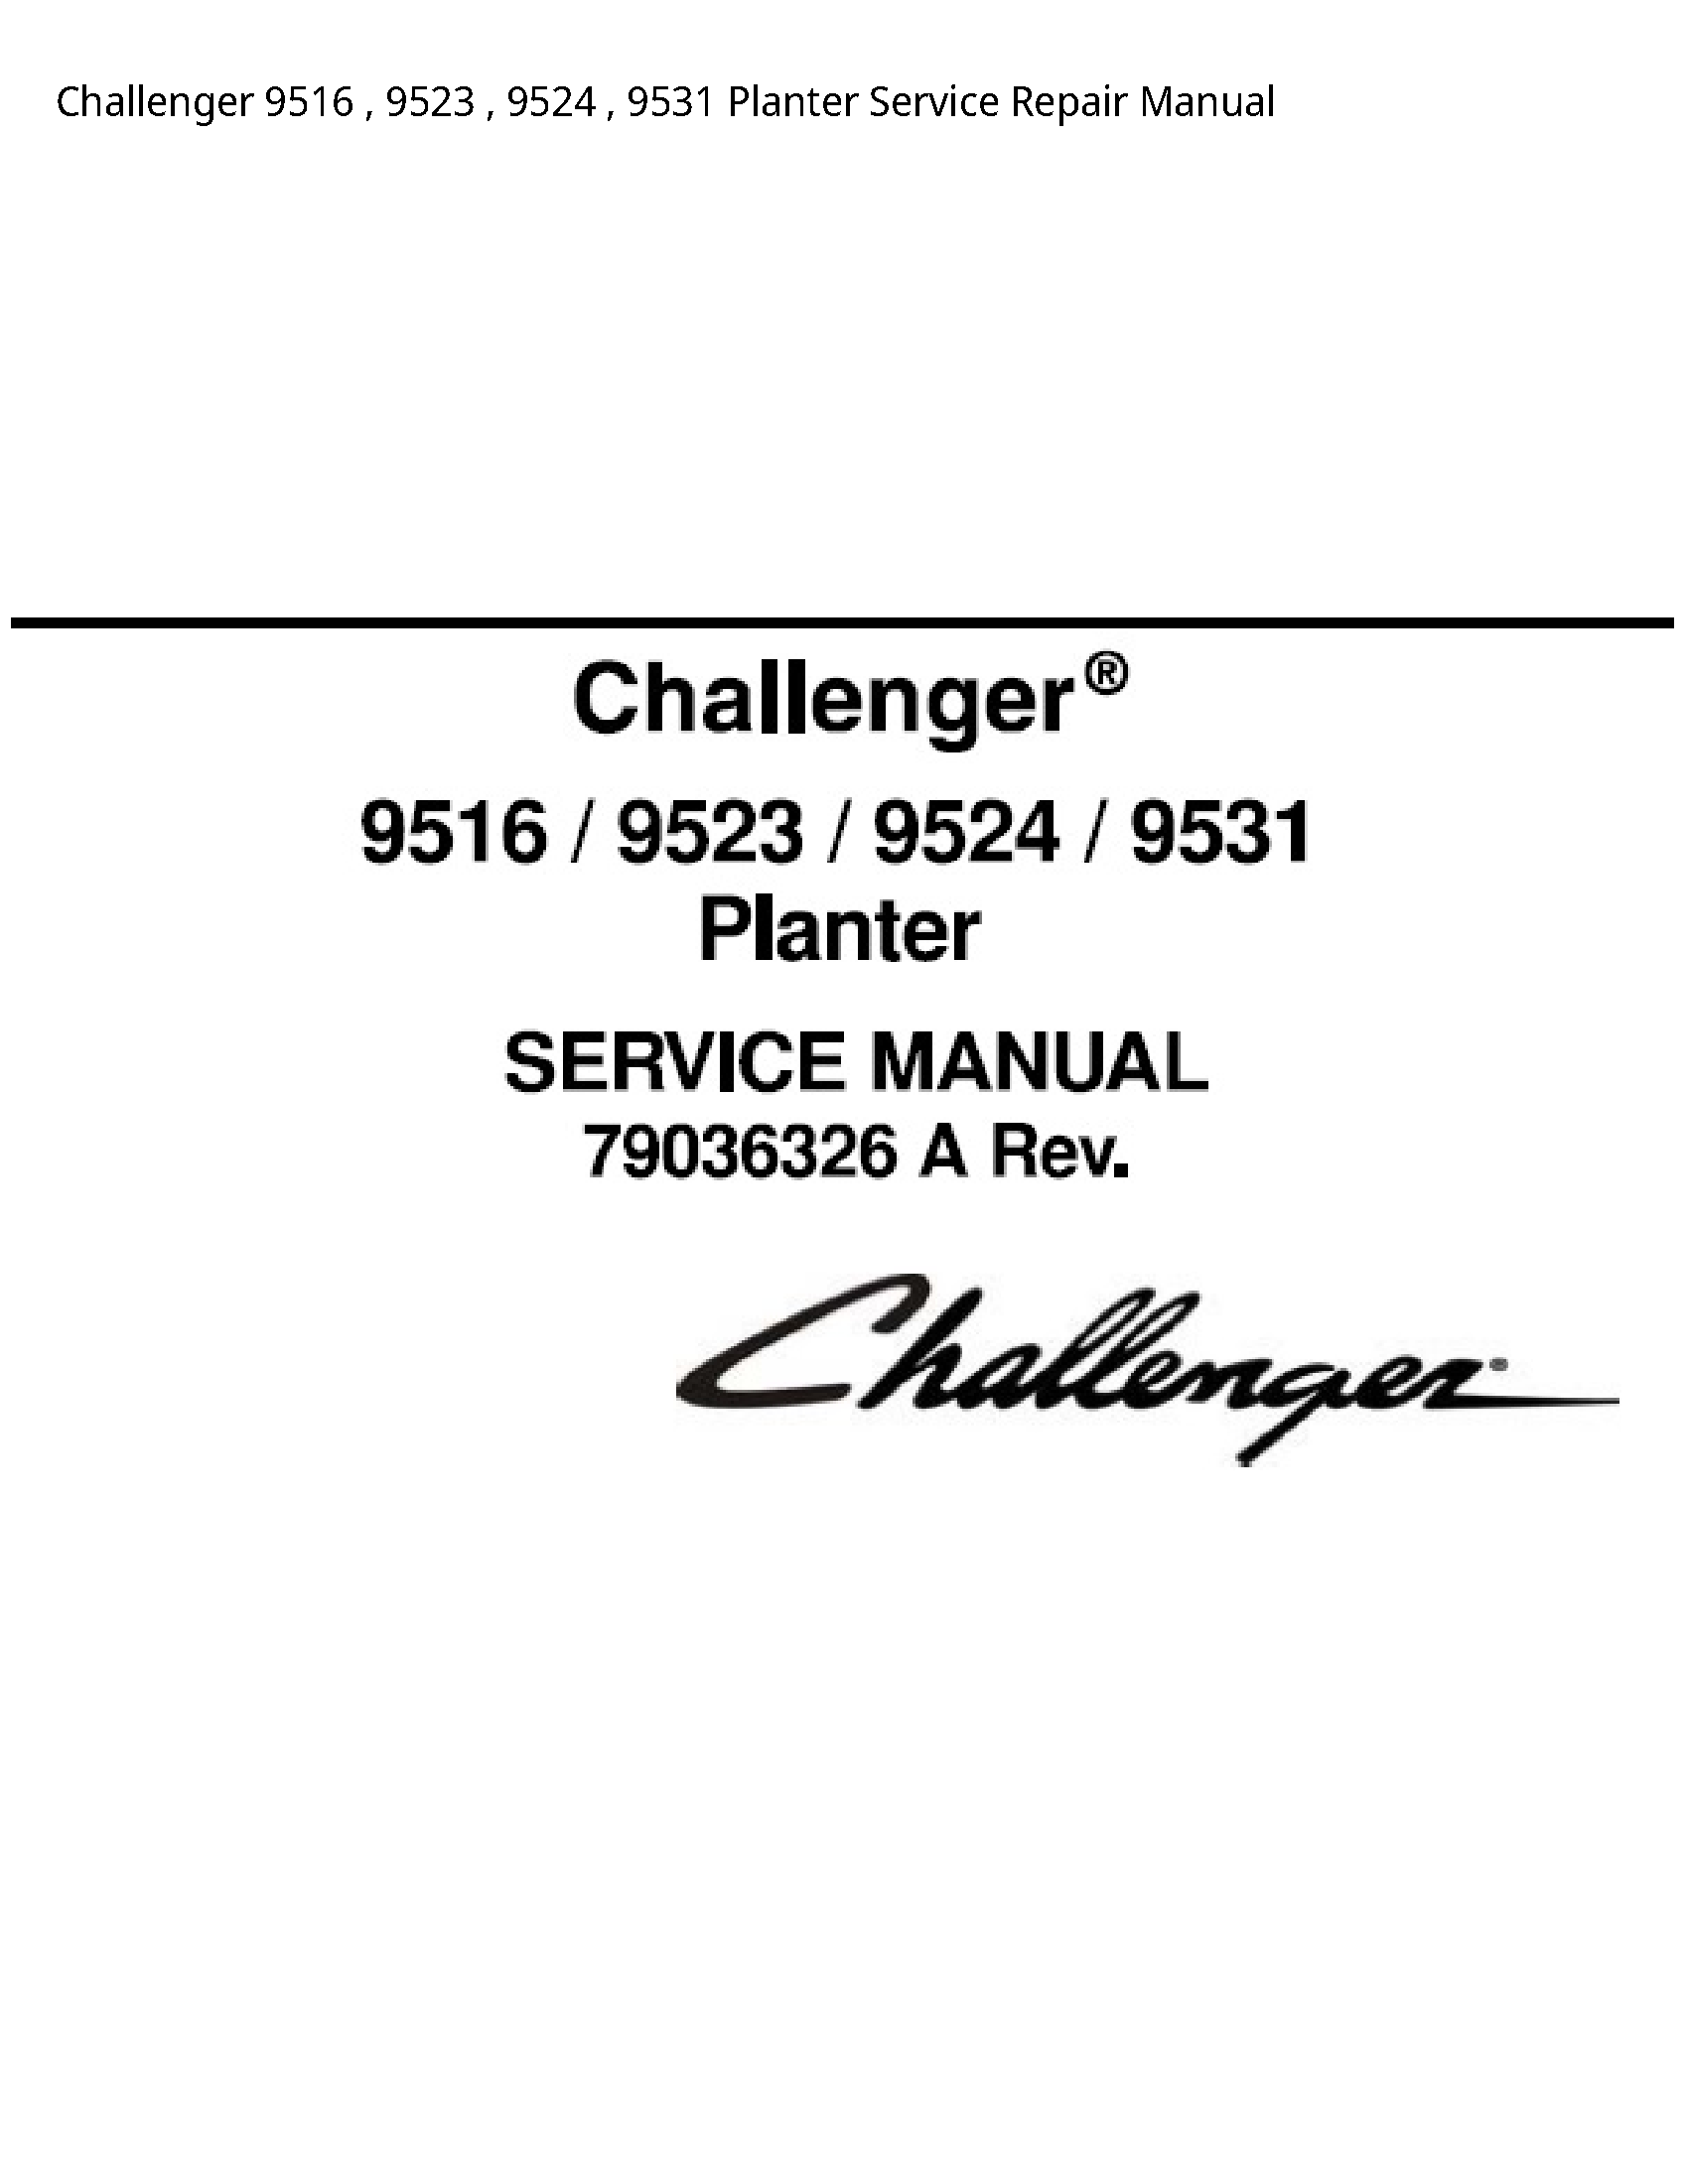 Challenger 9516 Planter manual